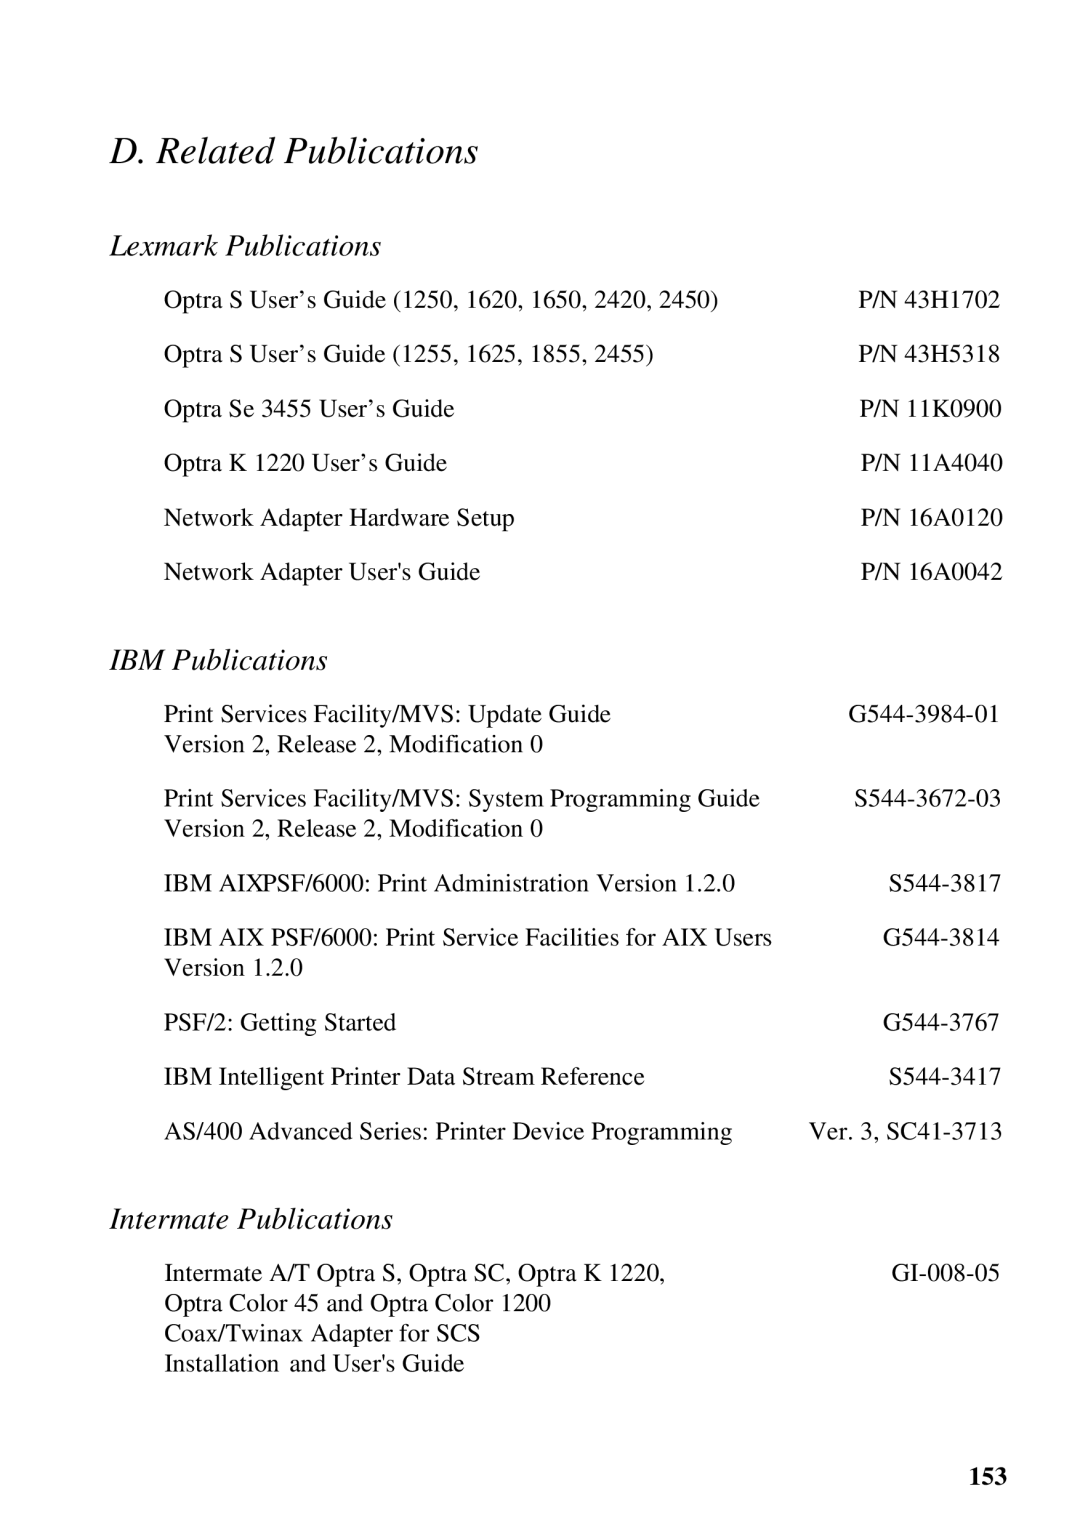 Lexmark Se 3455, K 1220 manual Related Publications, Lexmark Publications, IBM Publications, Intermate Publications 